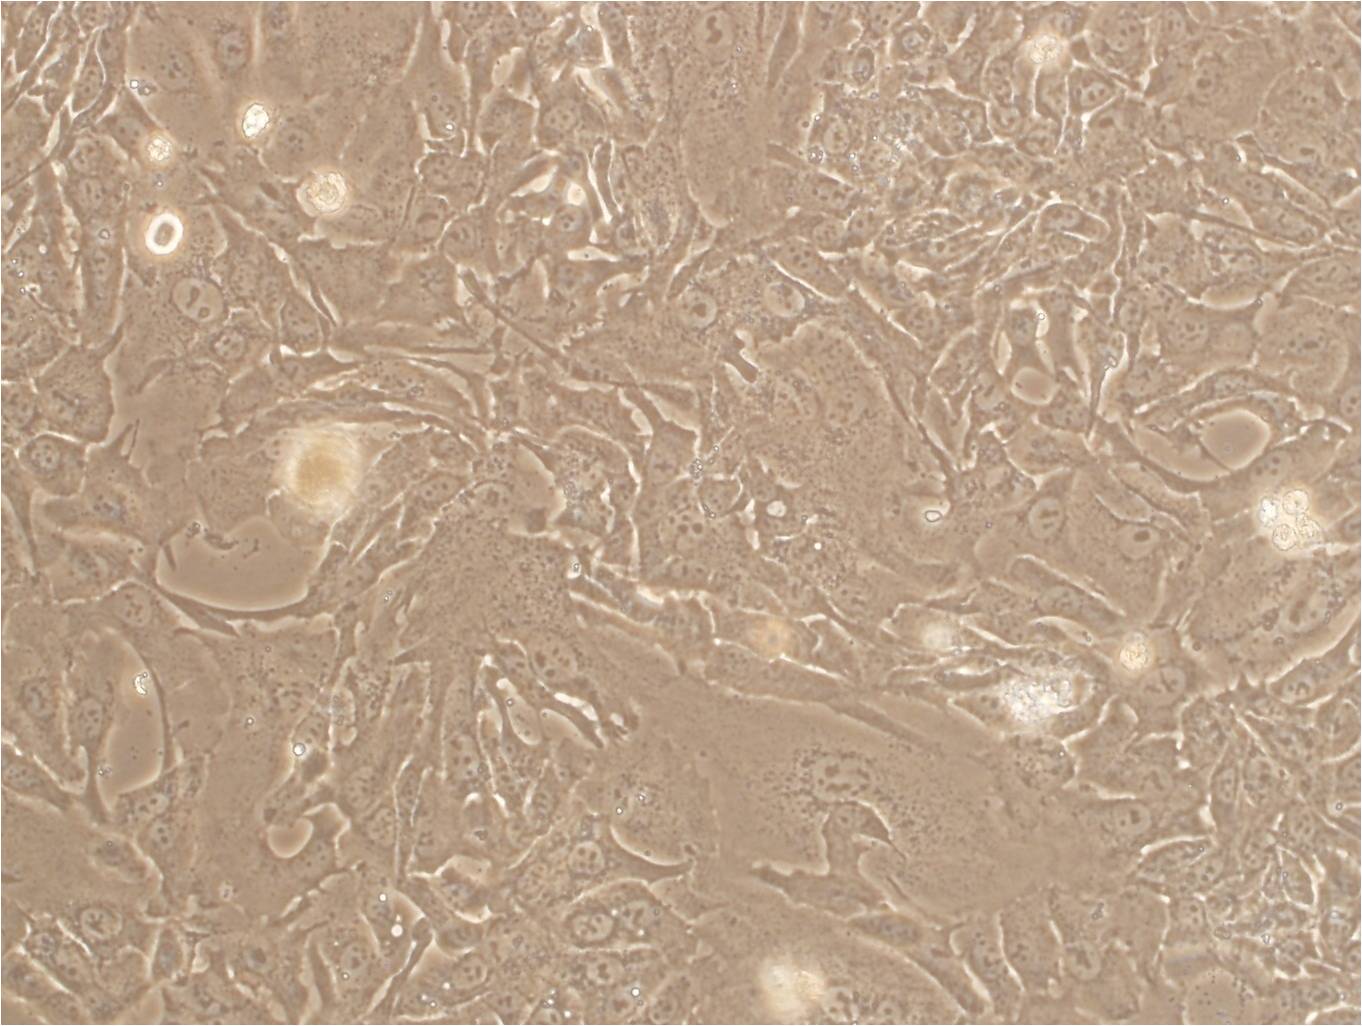 SiHa cell line人子宫颈鳞状细胞癌细胞系